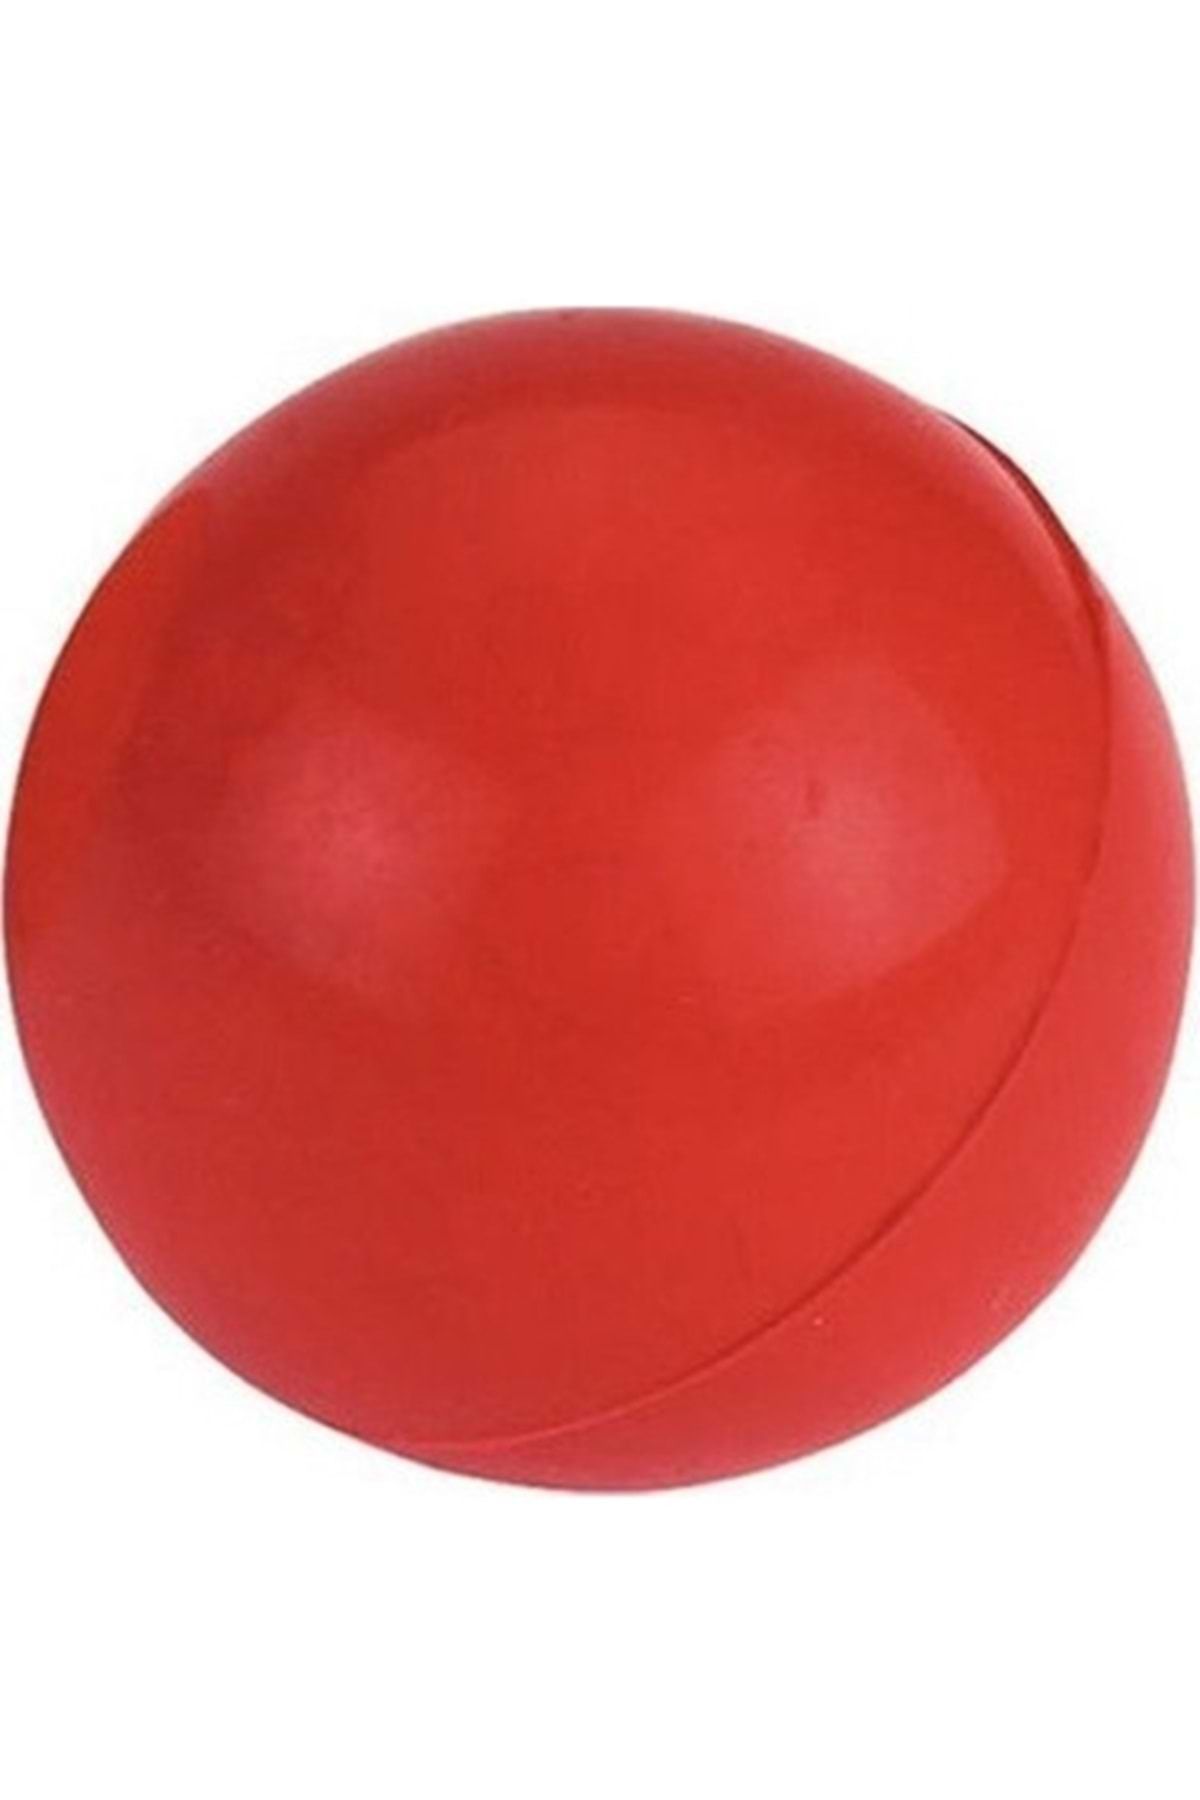 Purrfect Purrrfect Pet Yuvarlak Oyun Topu Kırmızı Kırmızı --- --- 200gr. 1ad.